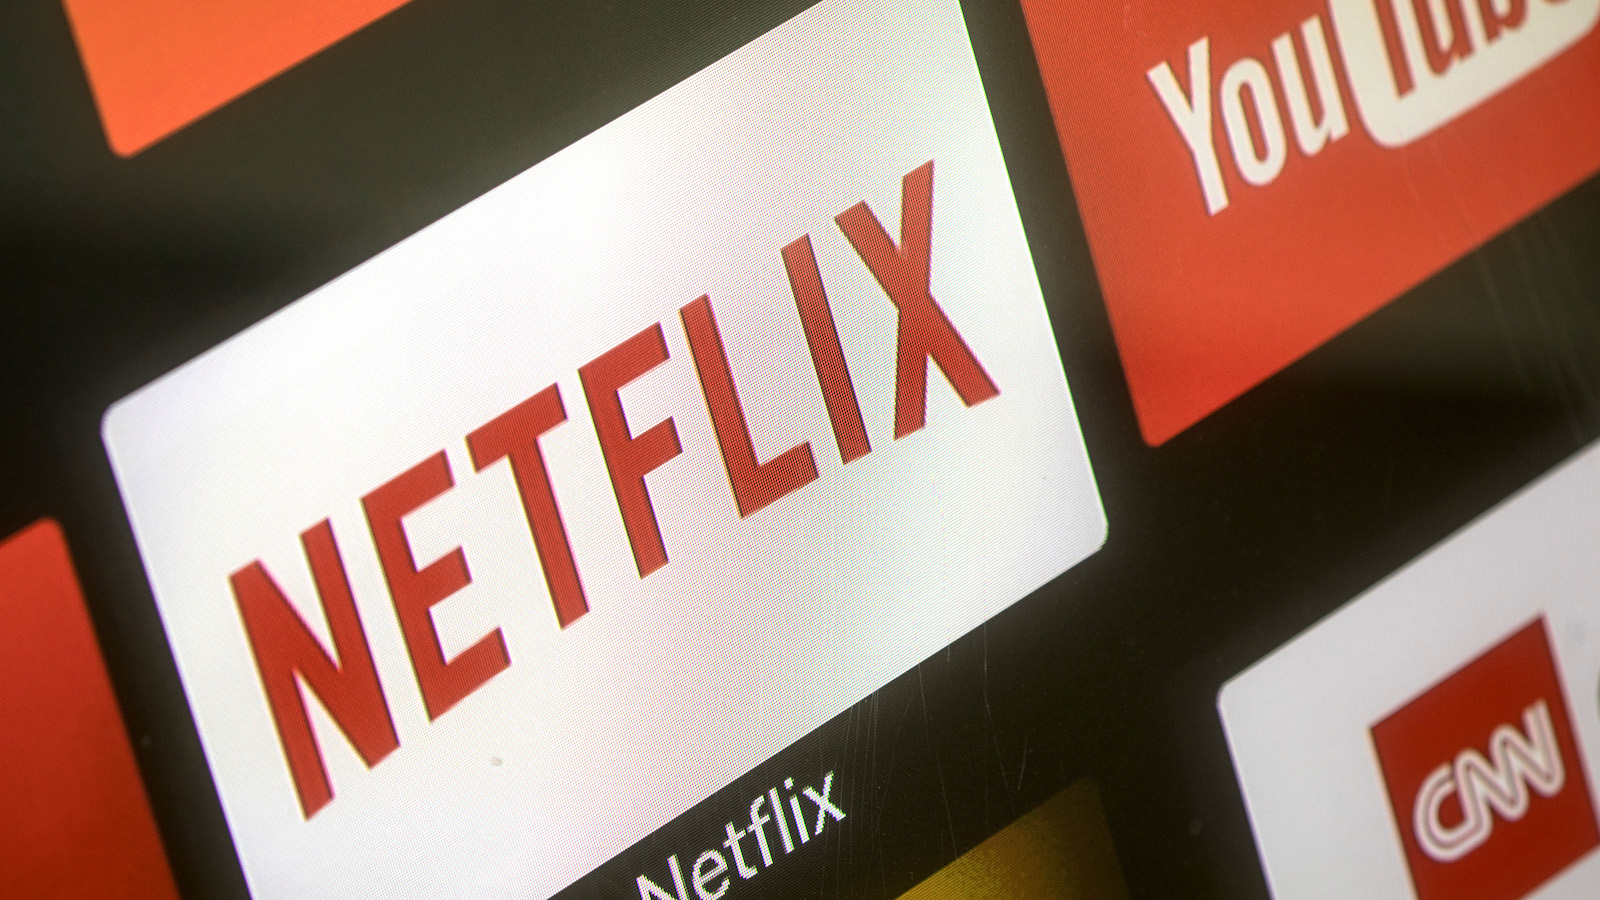 Logotipo de Netflix que se muestra en una pantalla de TV